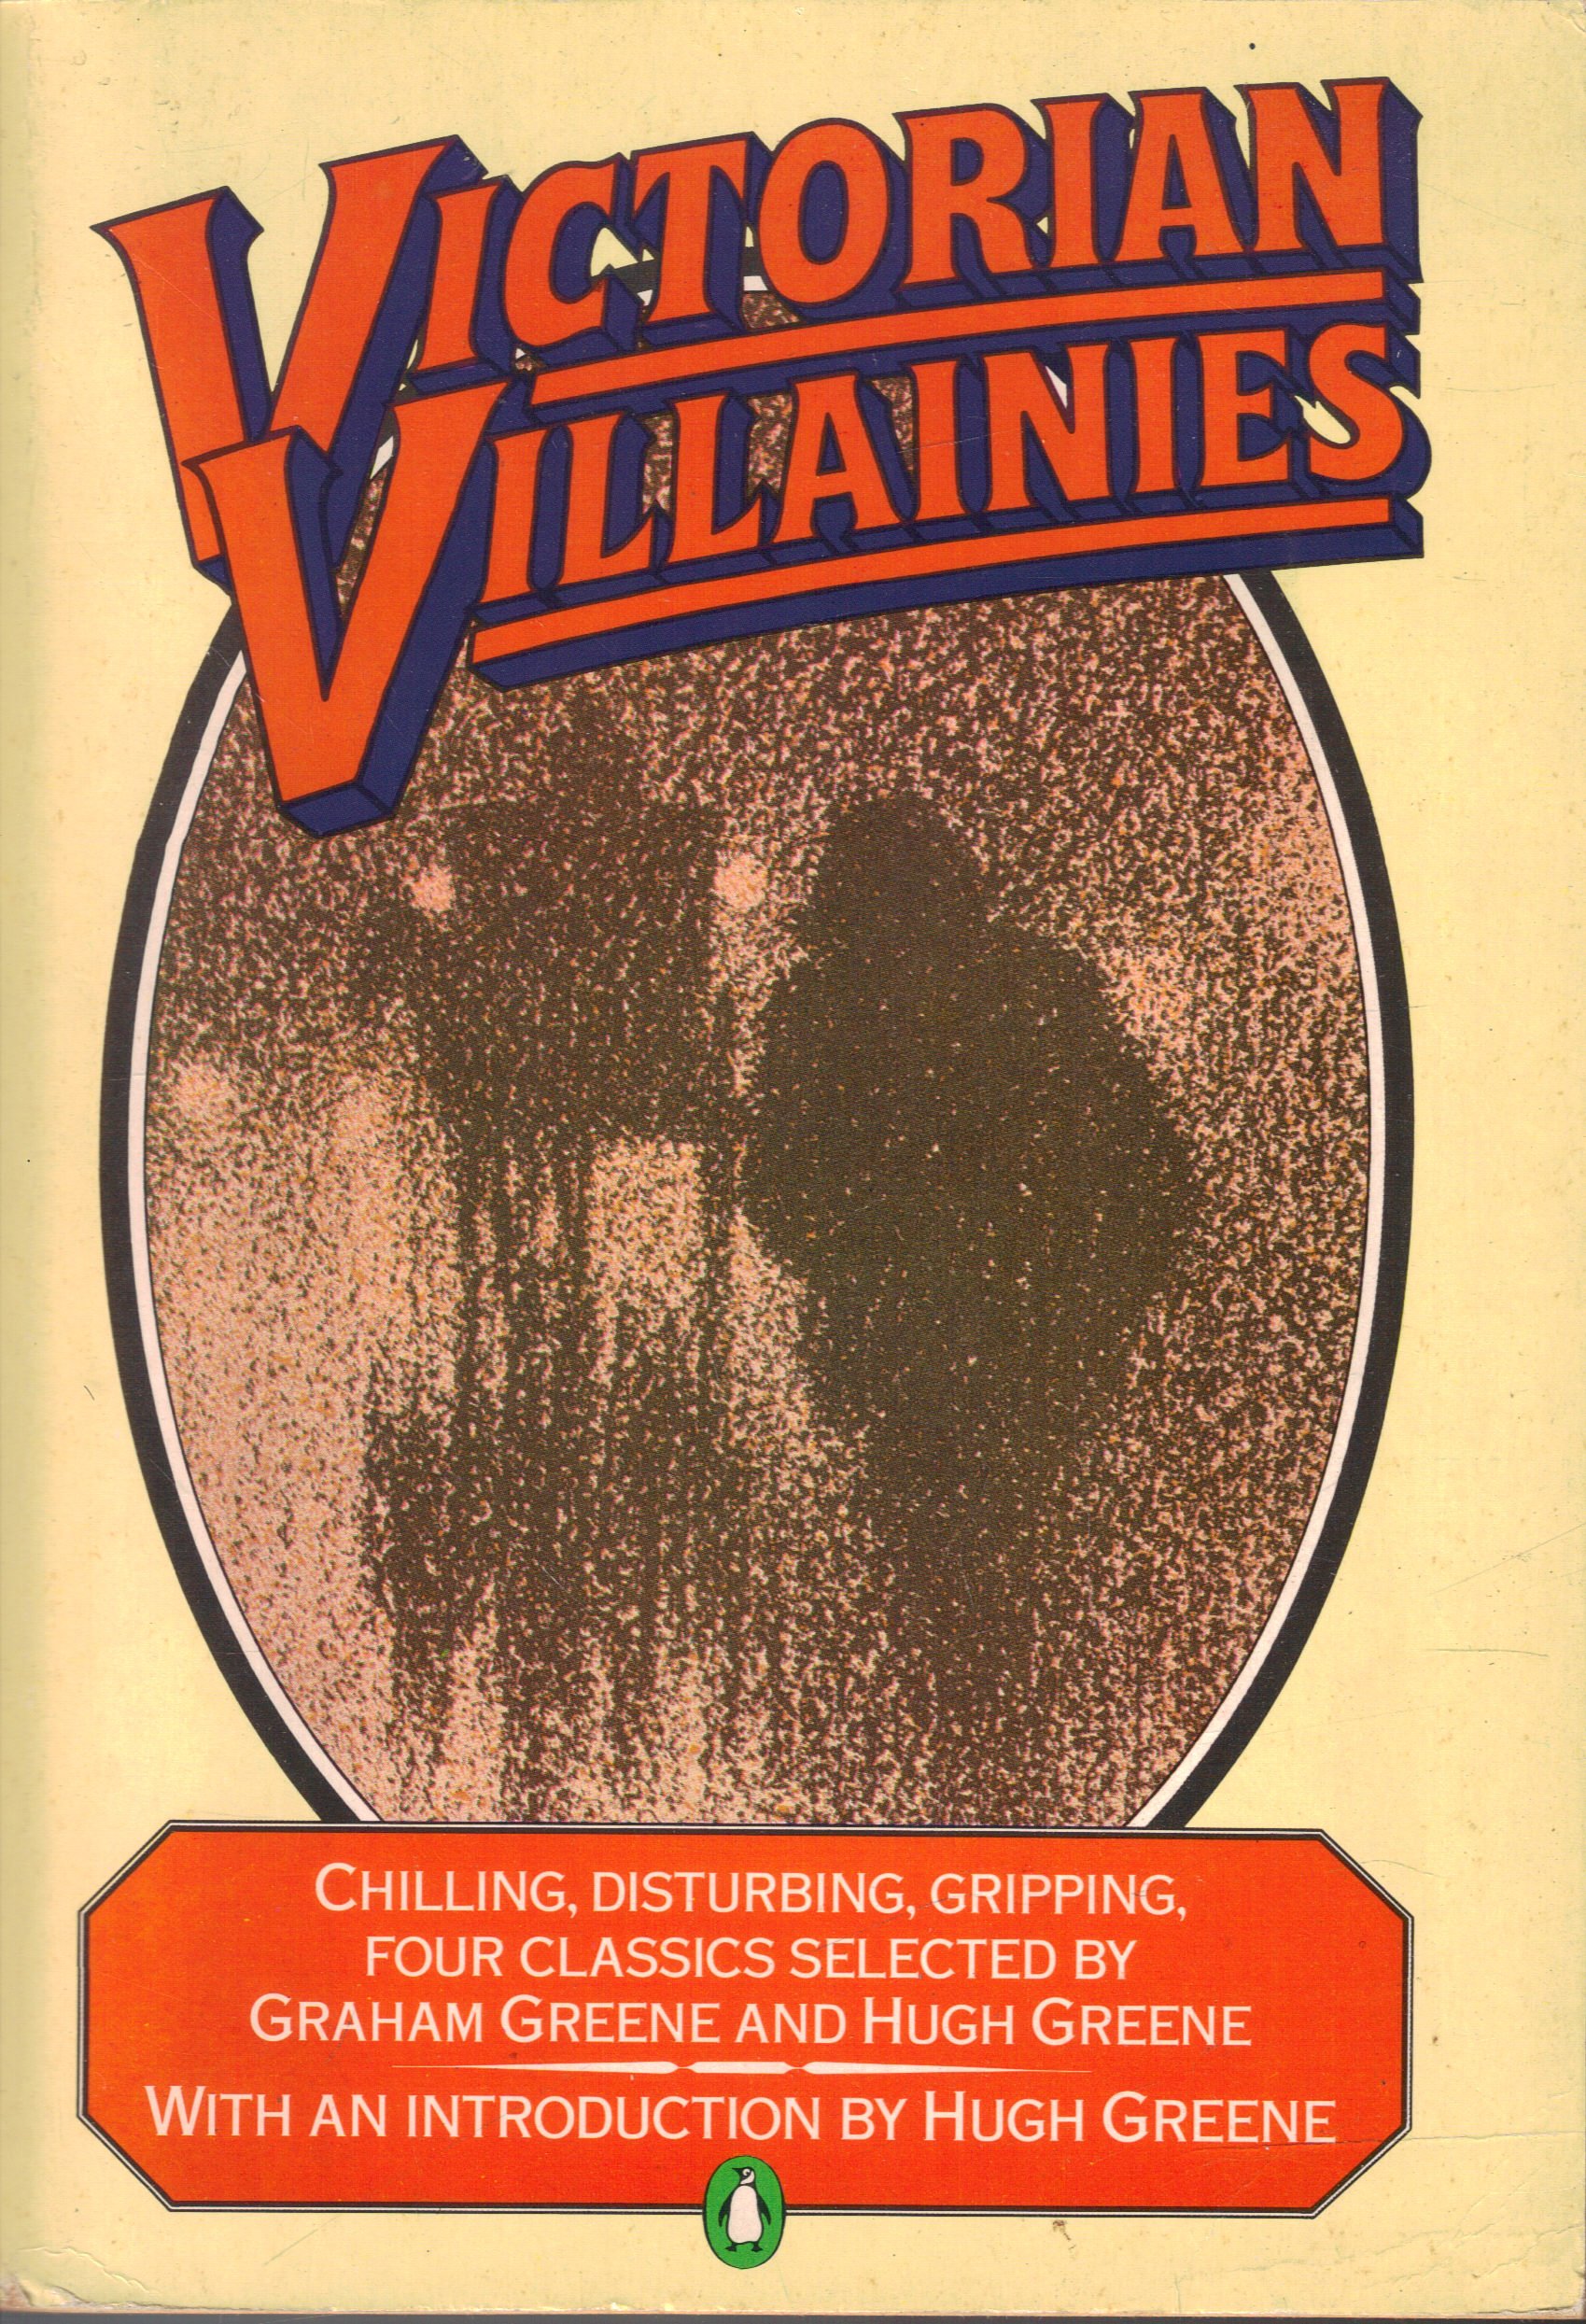 Victorian villainies magazine reviews